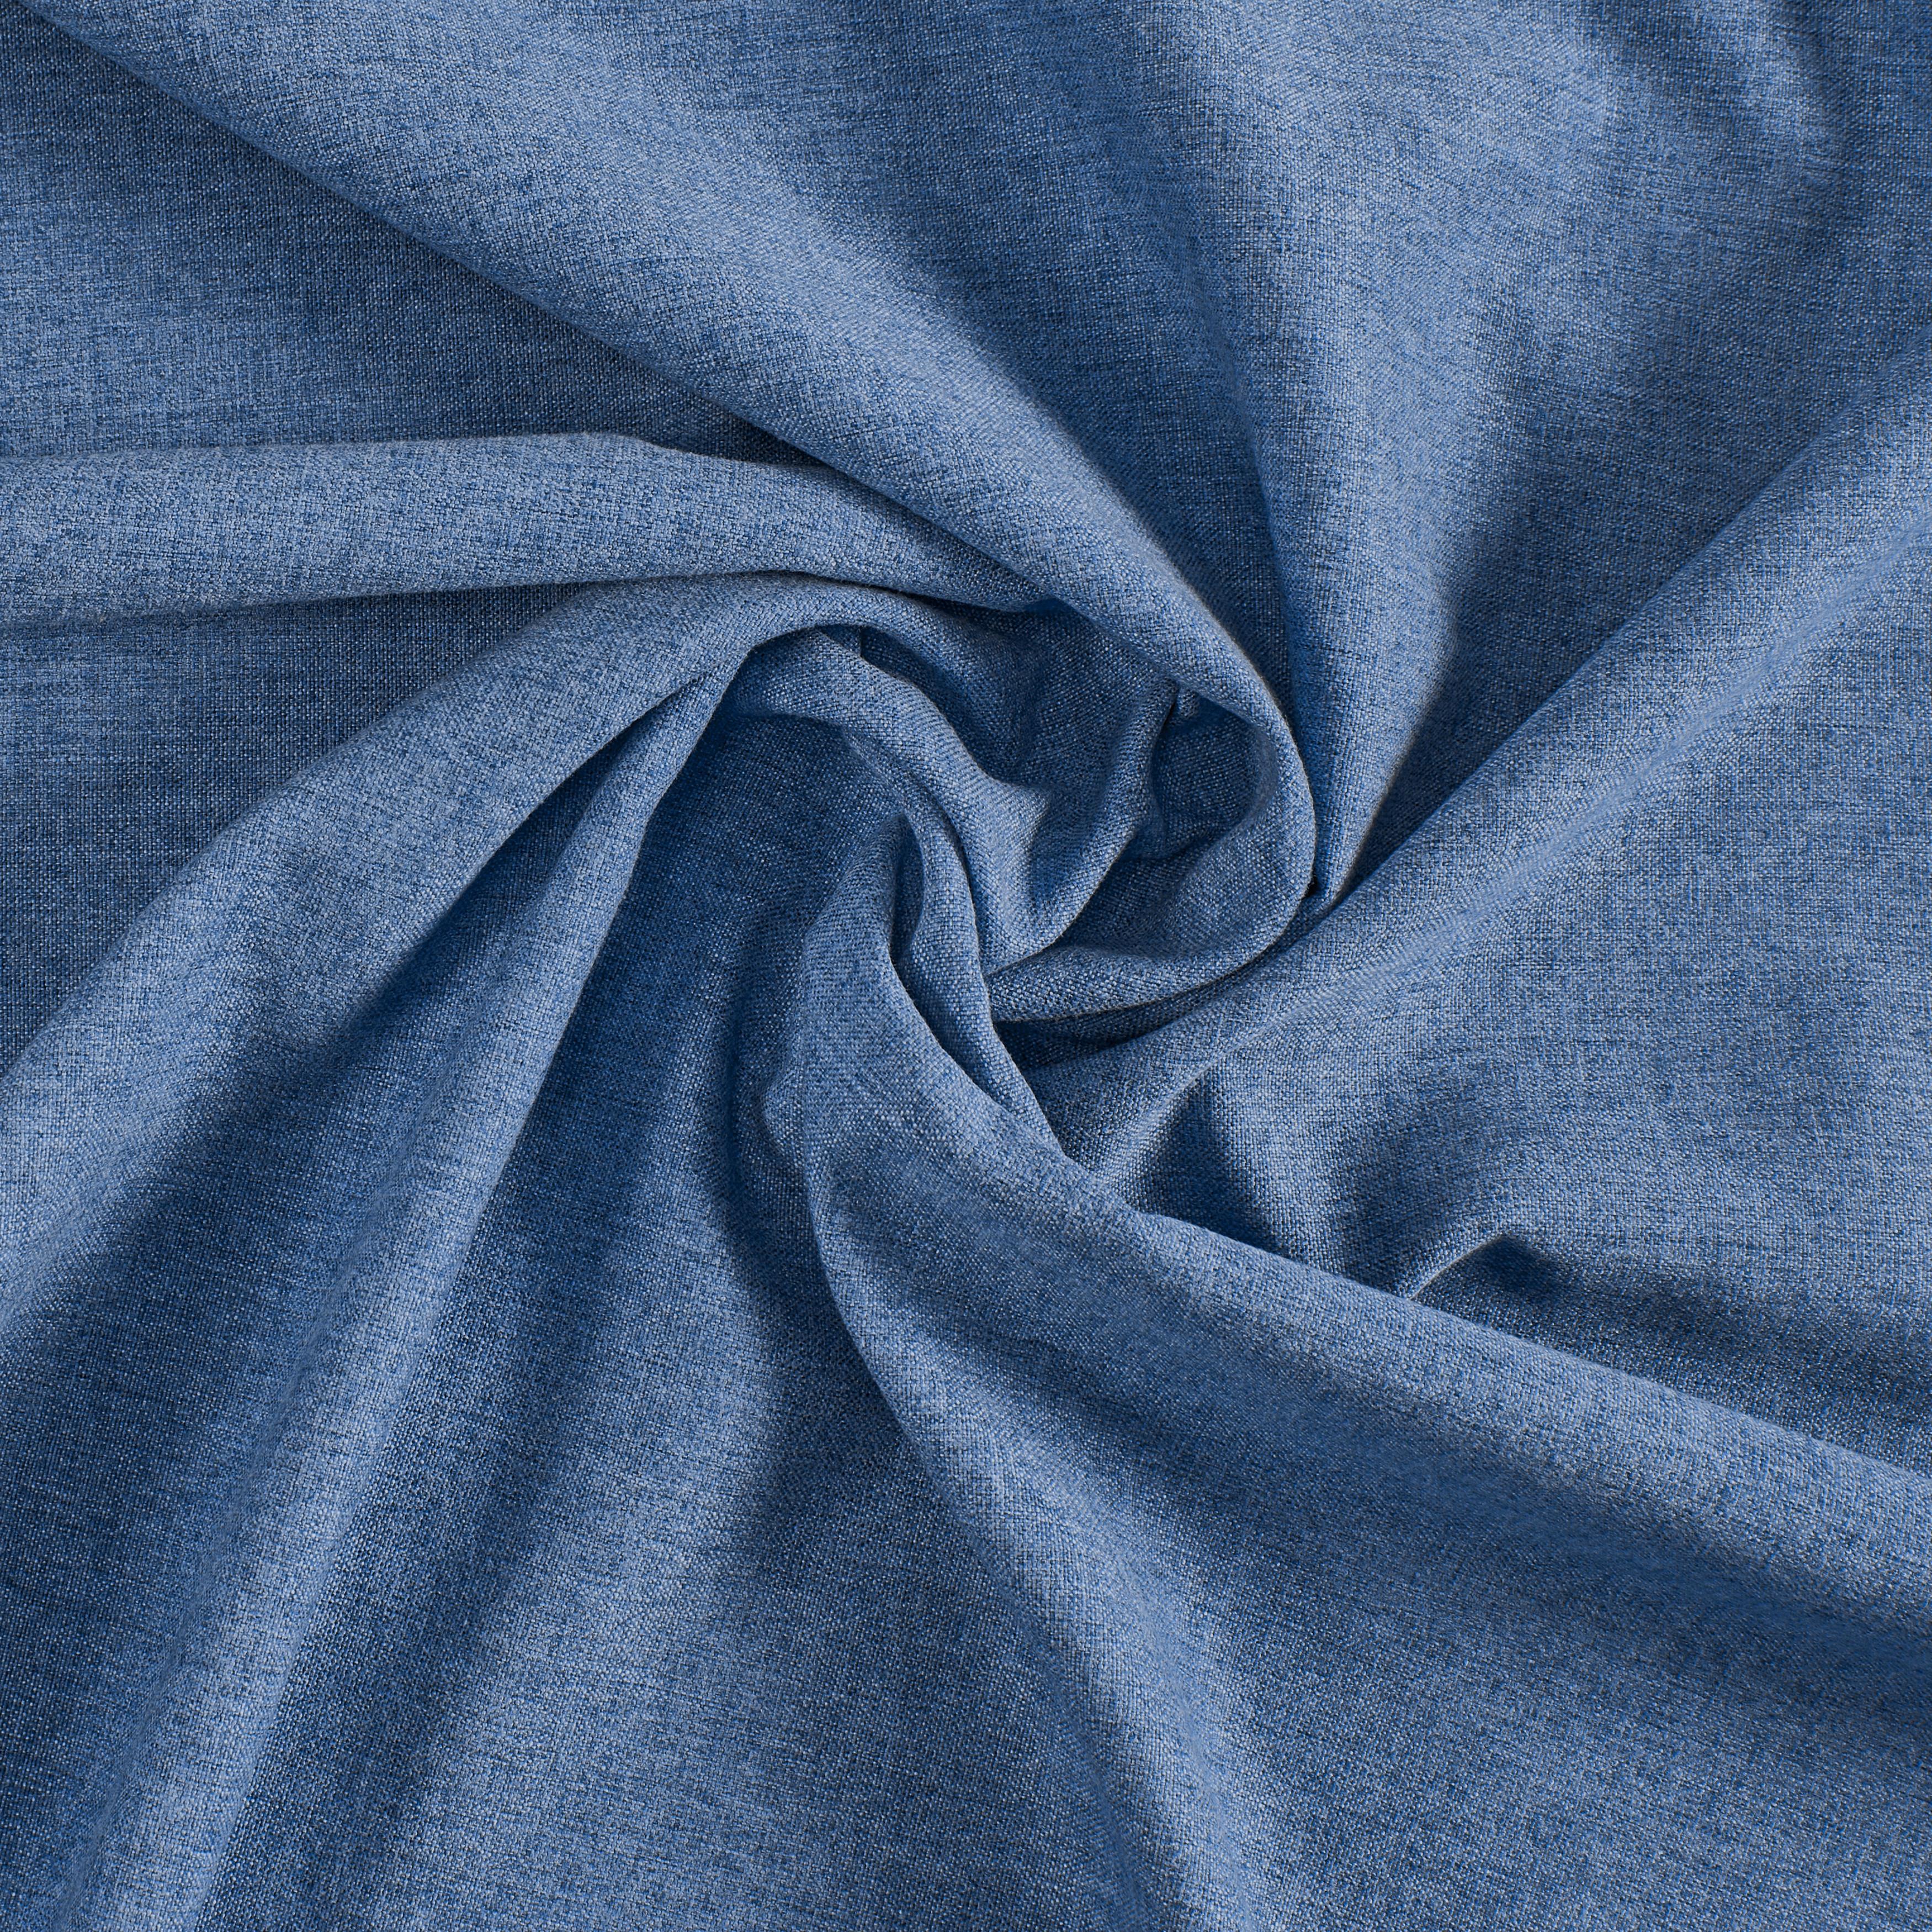 Končana Zavesa Ulrich - modra, tekstil (135/245cm) - Modern Living